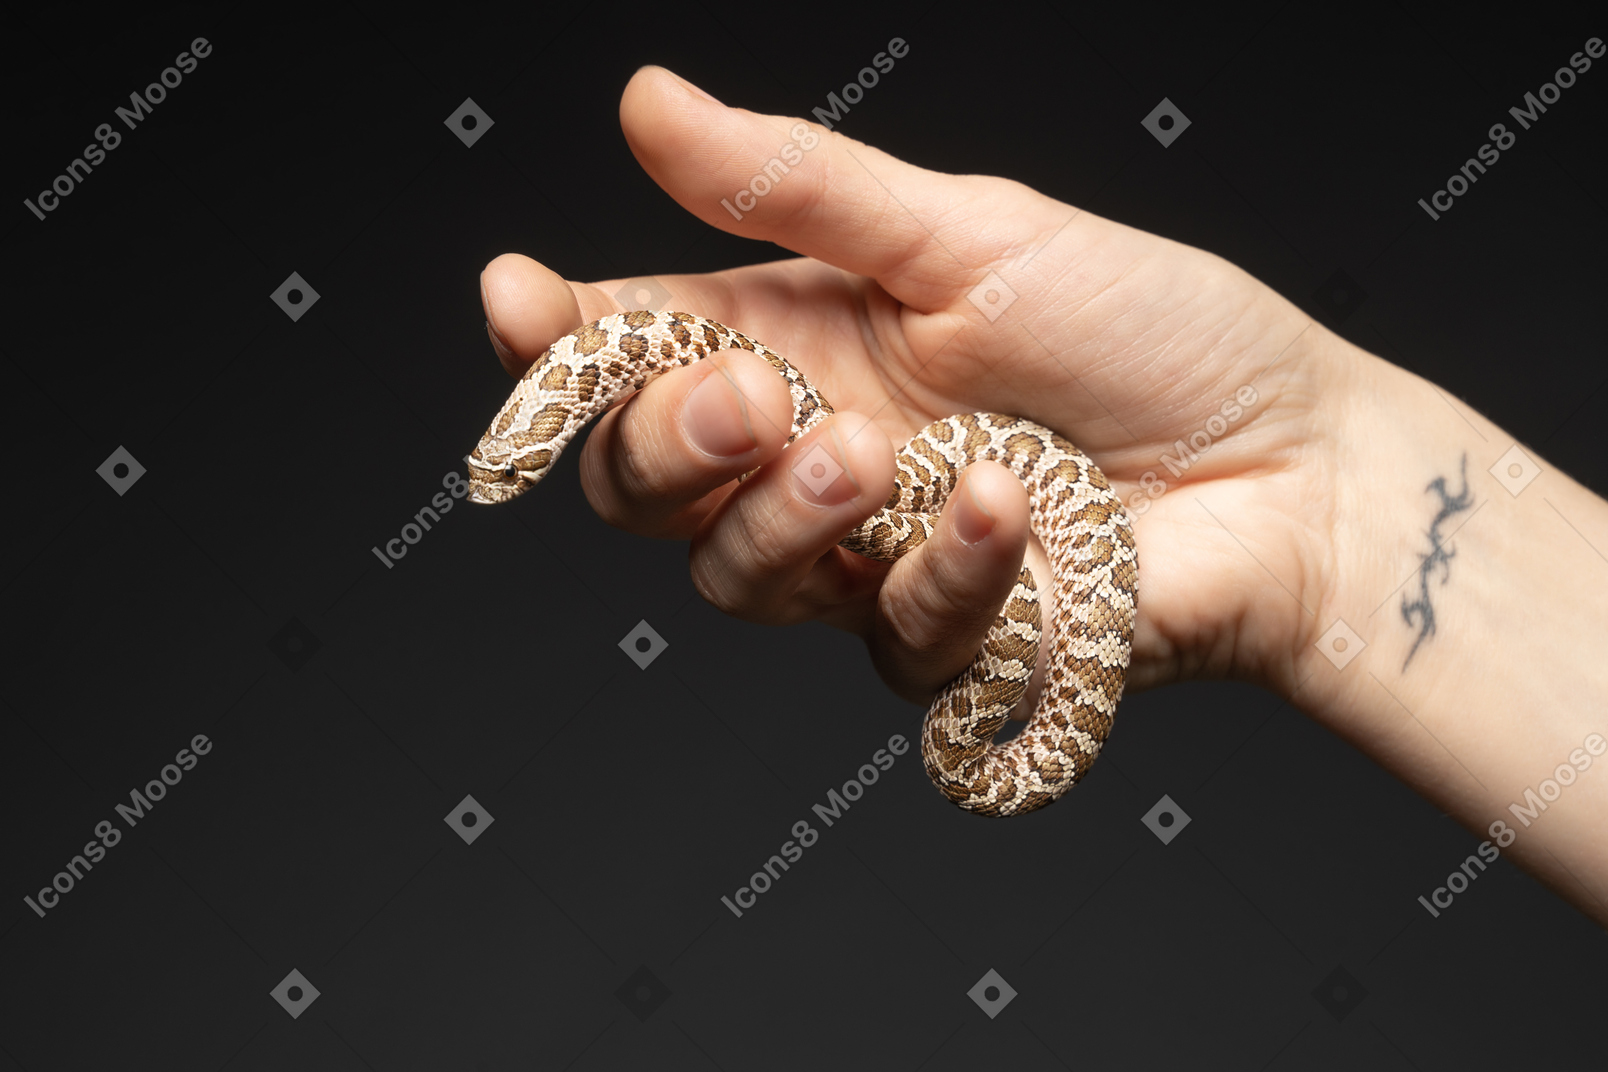 Little snake in human hand